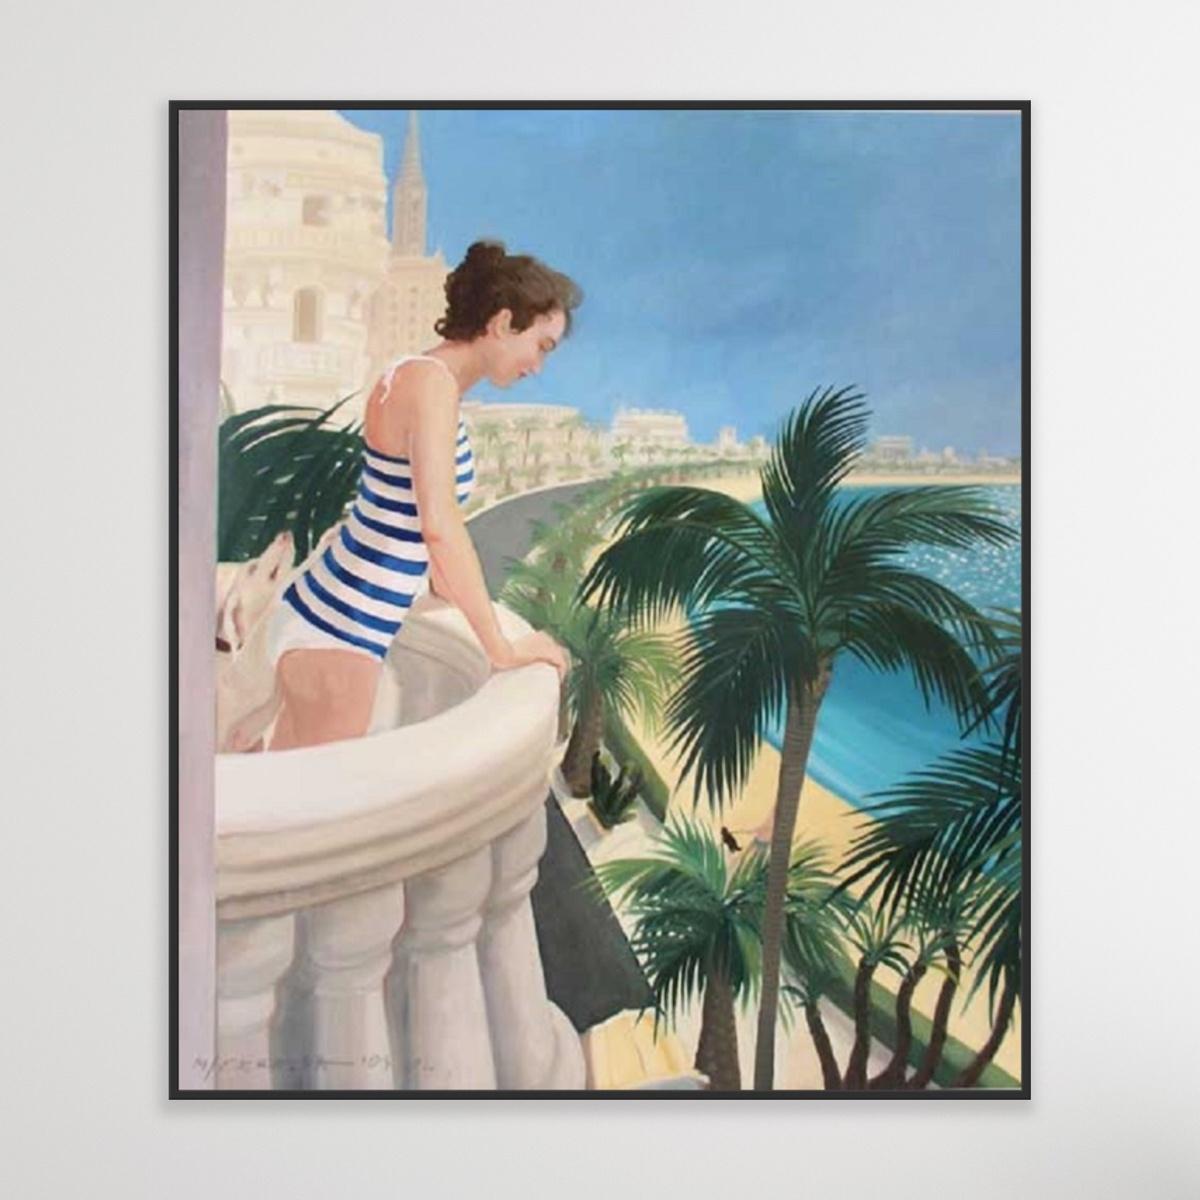 Saint Tropez - Oil on canvas, Figurative realist painting, Polish art - Painting by Marek Okrassa